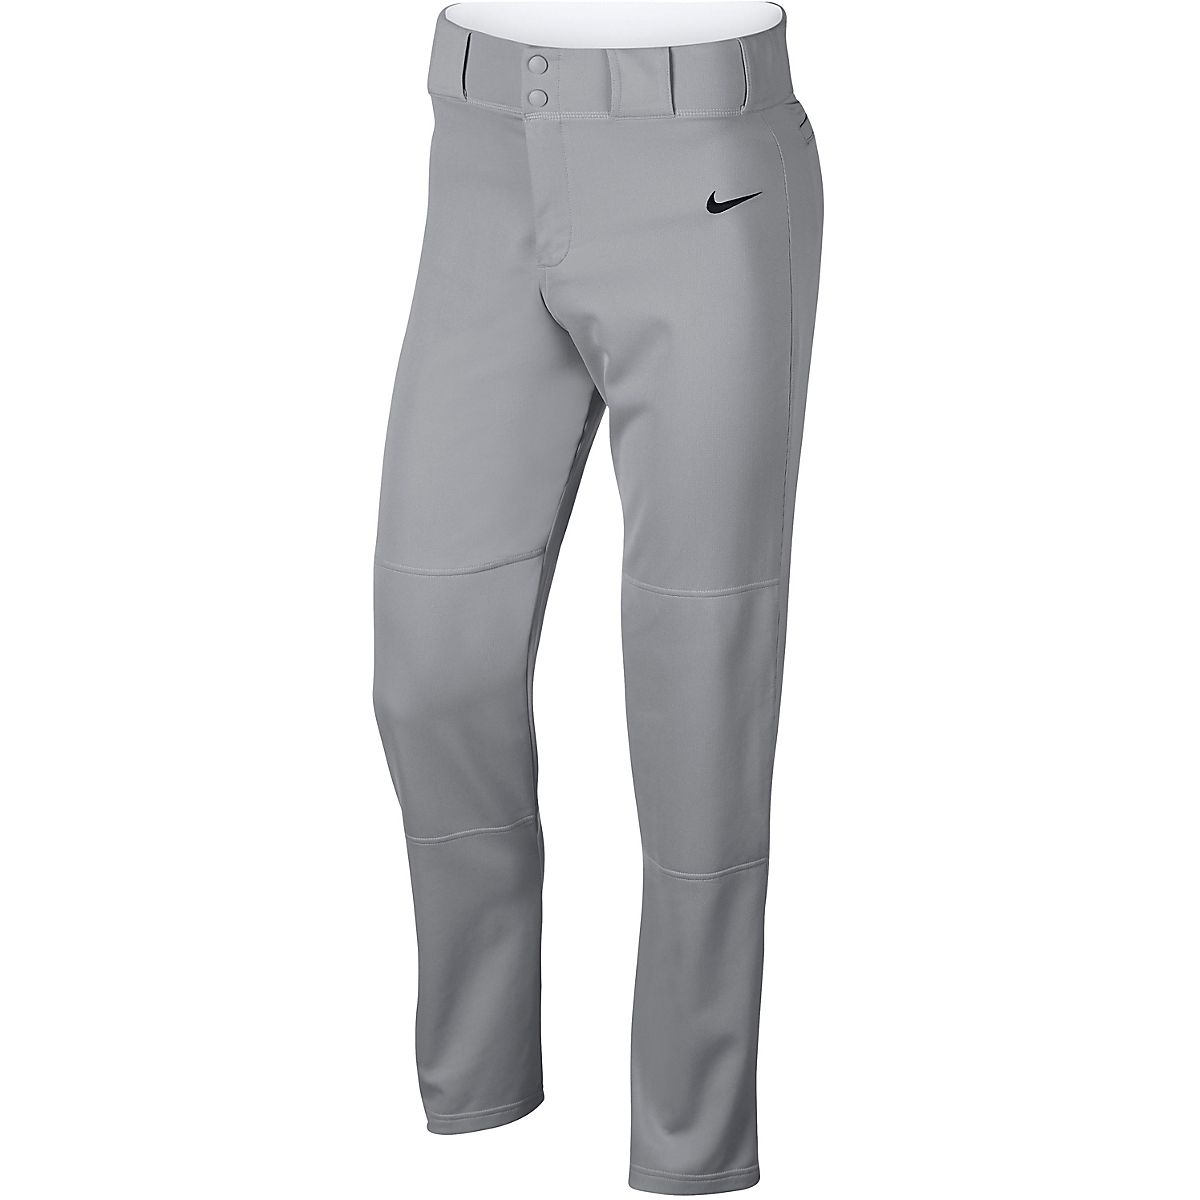 Nike Men's Core Baseball Pants | Free Shipping at Academy